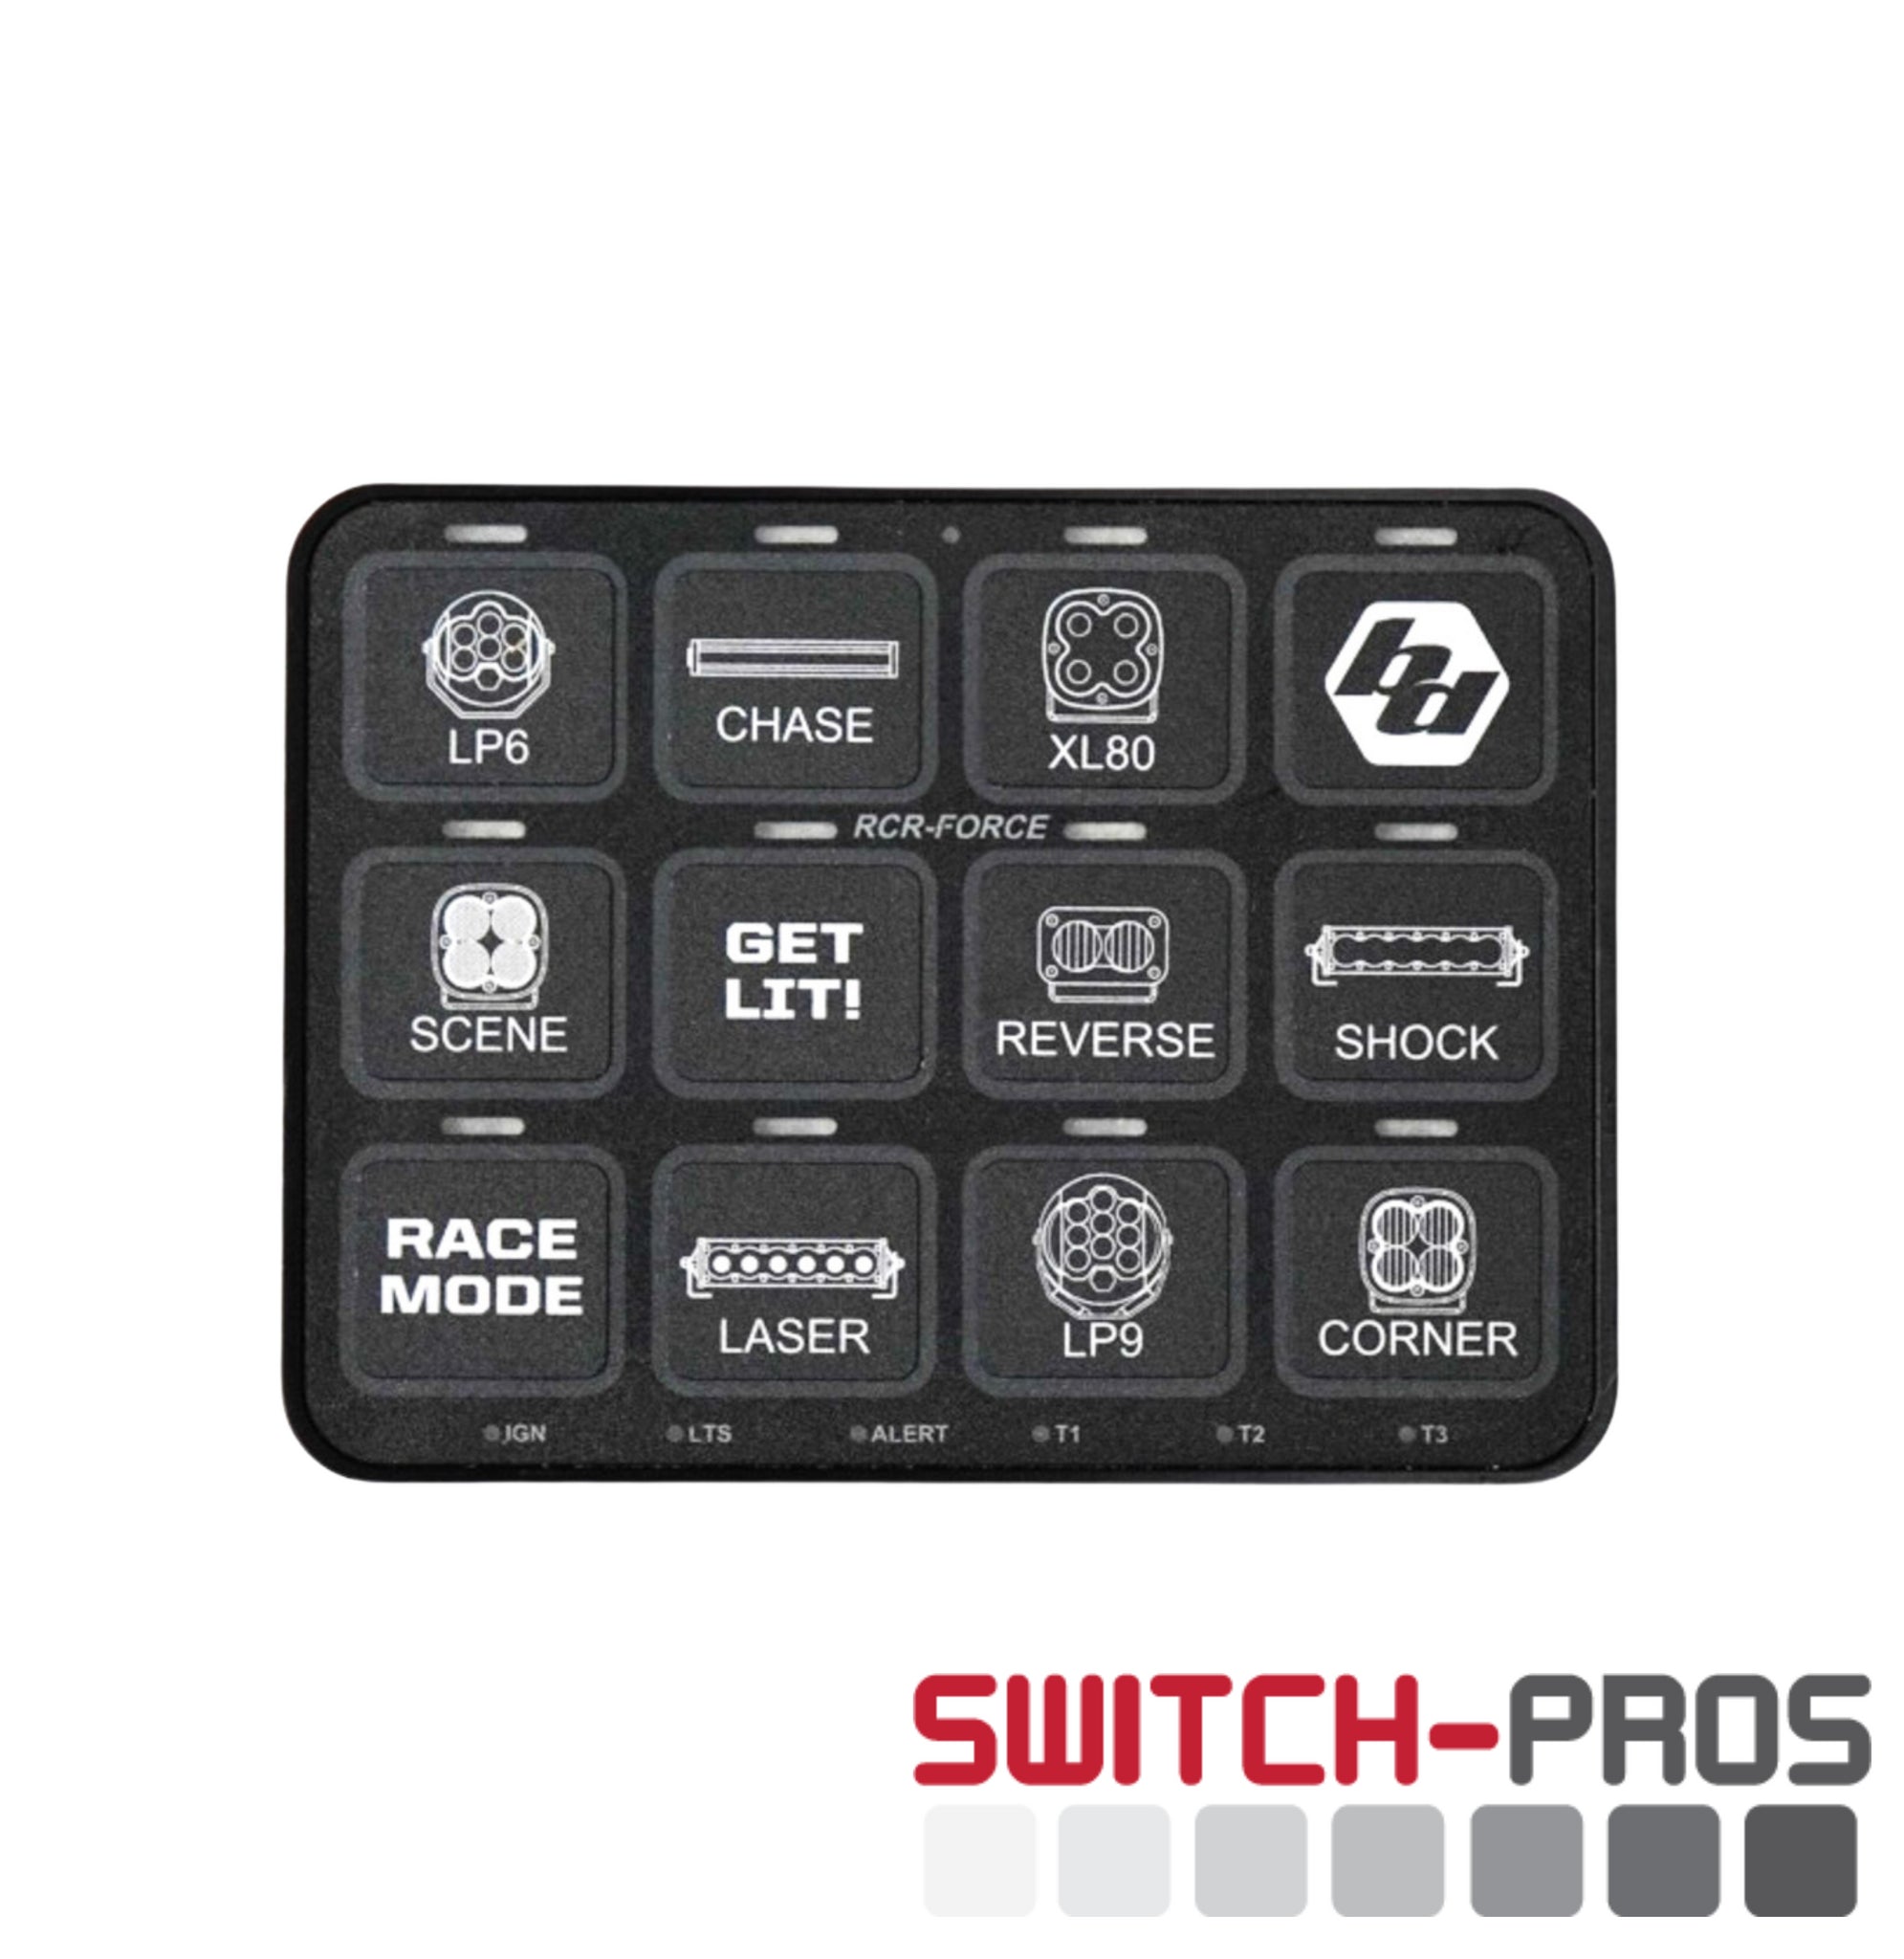 Baja Designs Legend Kit Switch Pros display